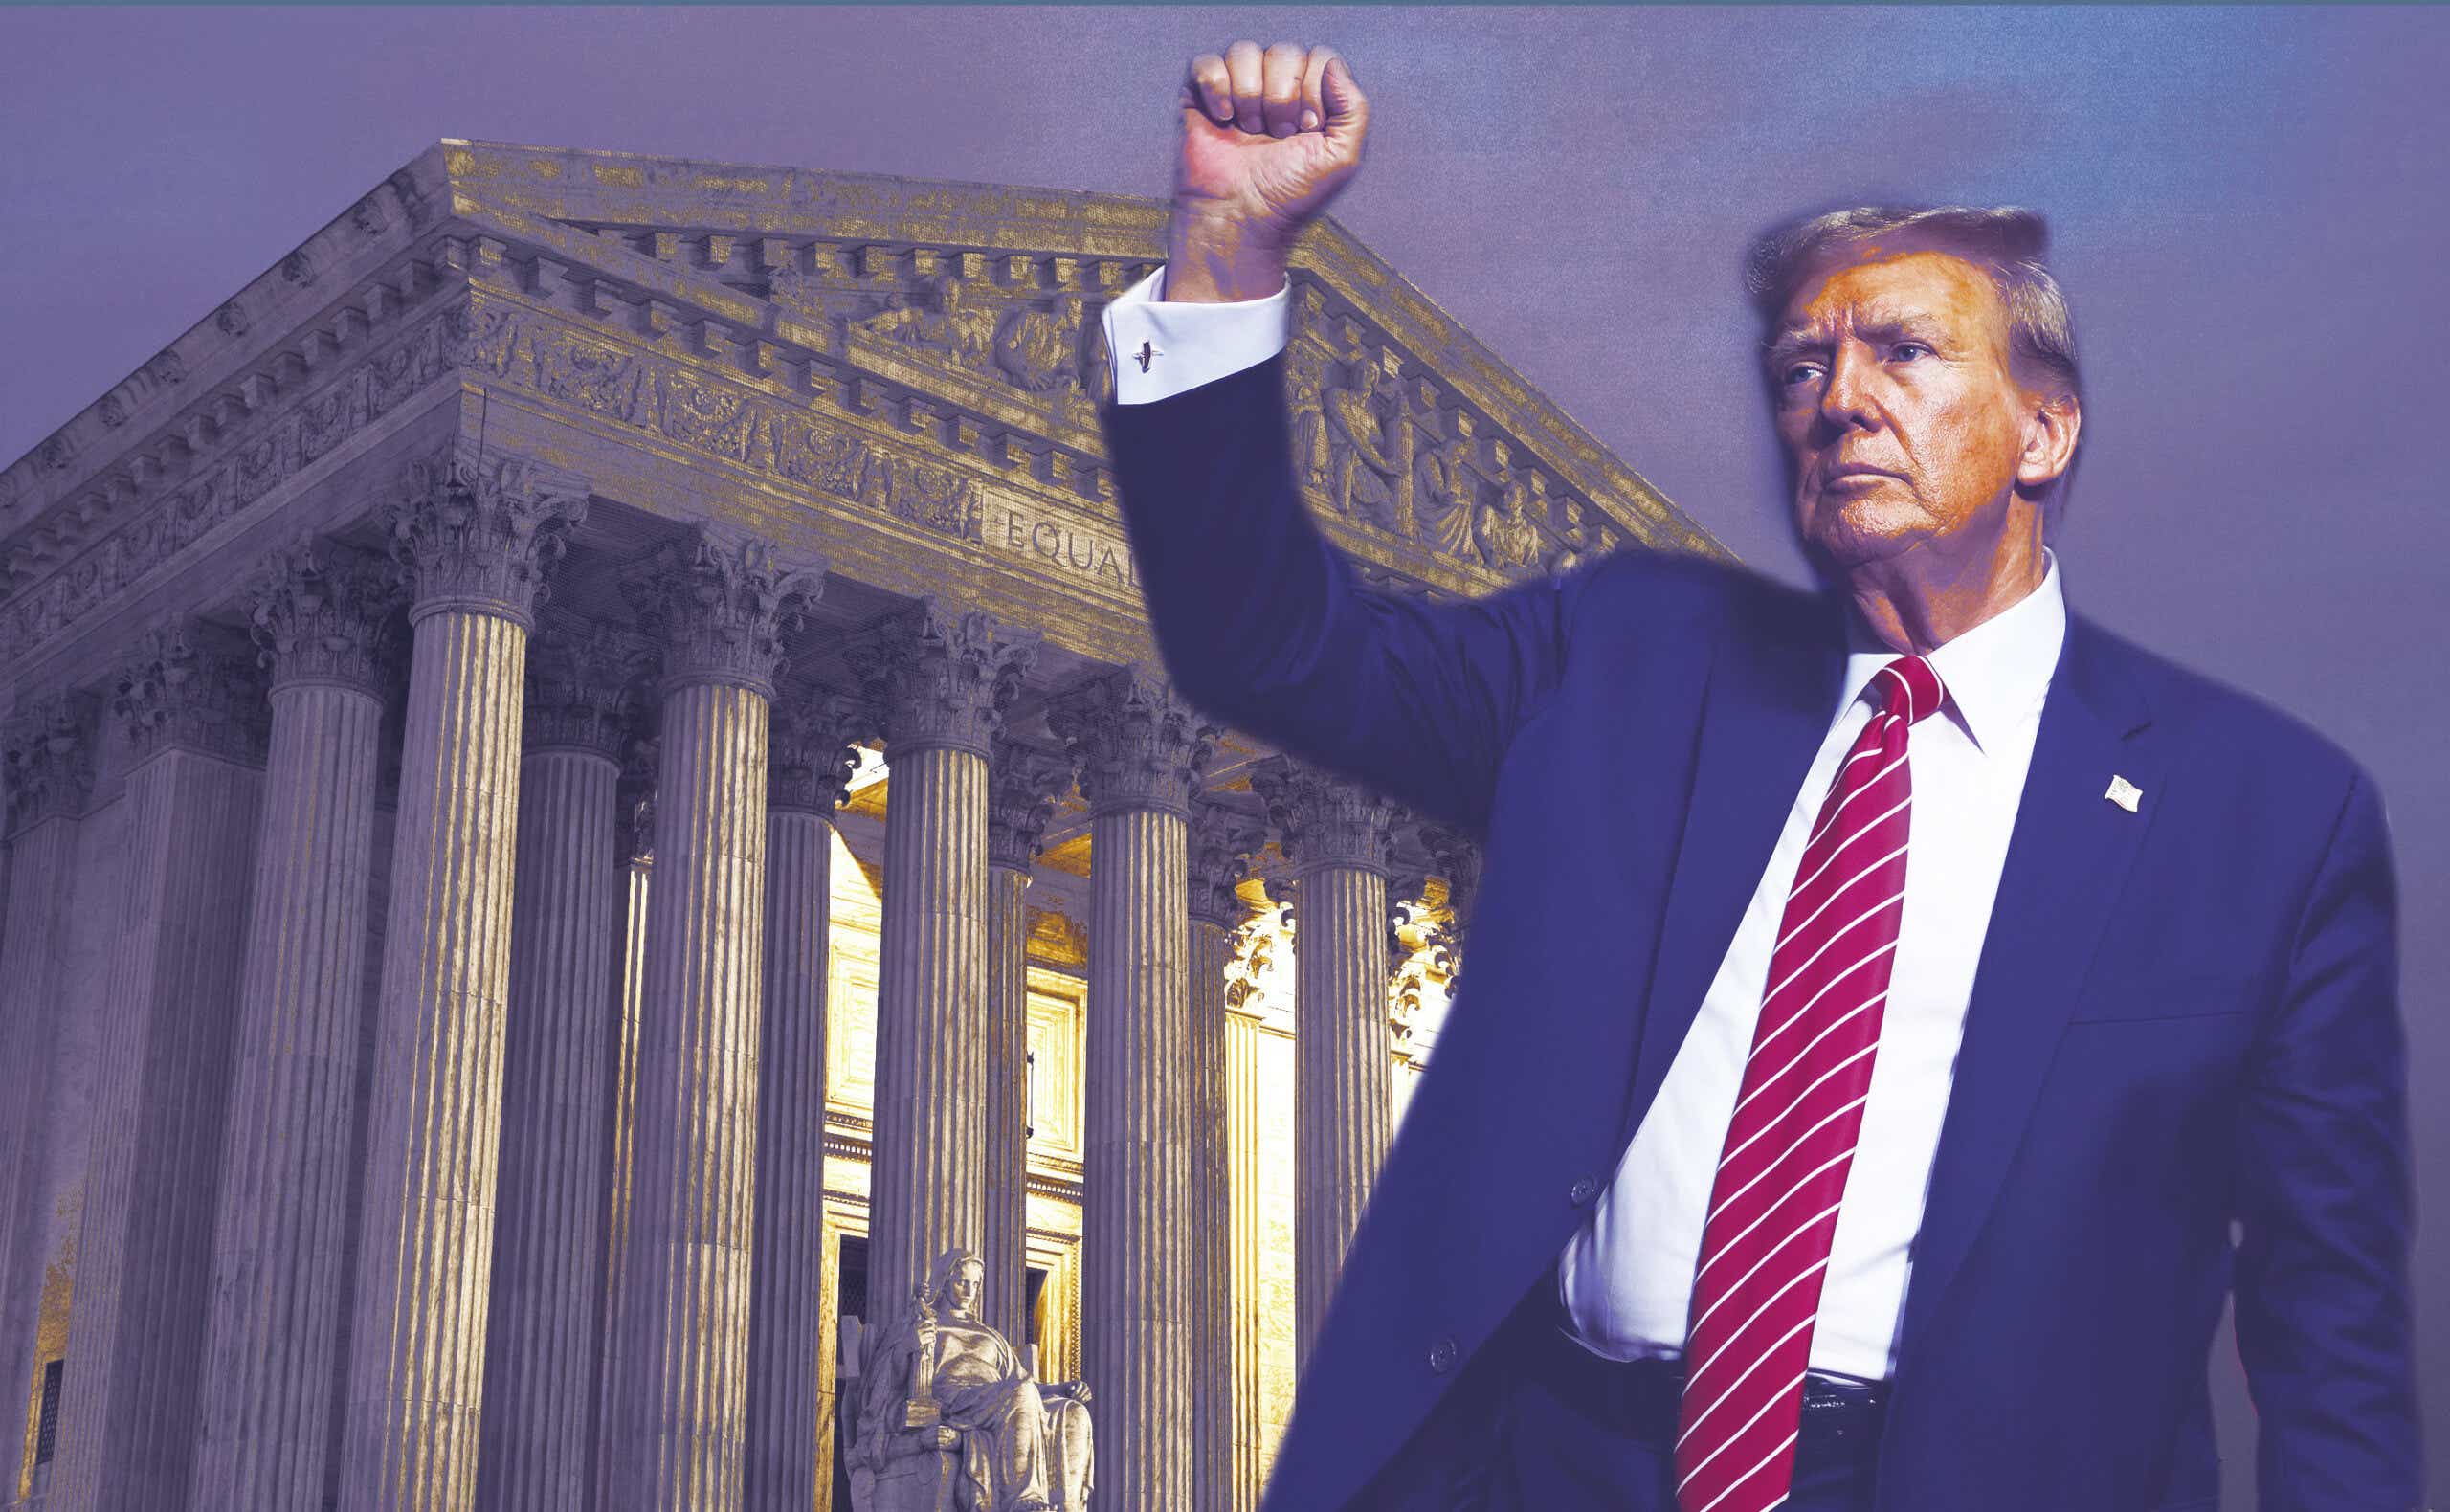 Donald Trump superimposed over the Supreme Court building